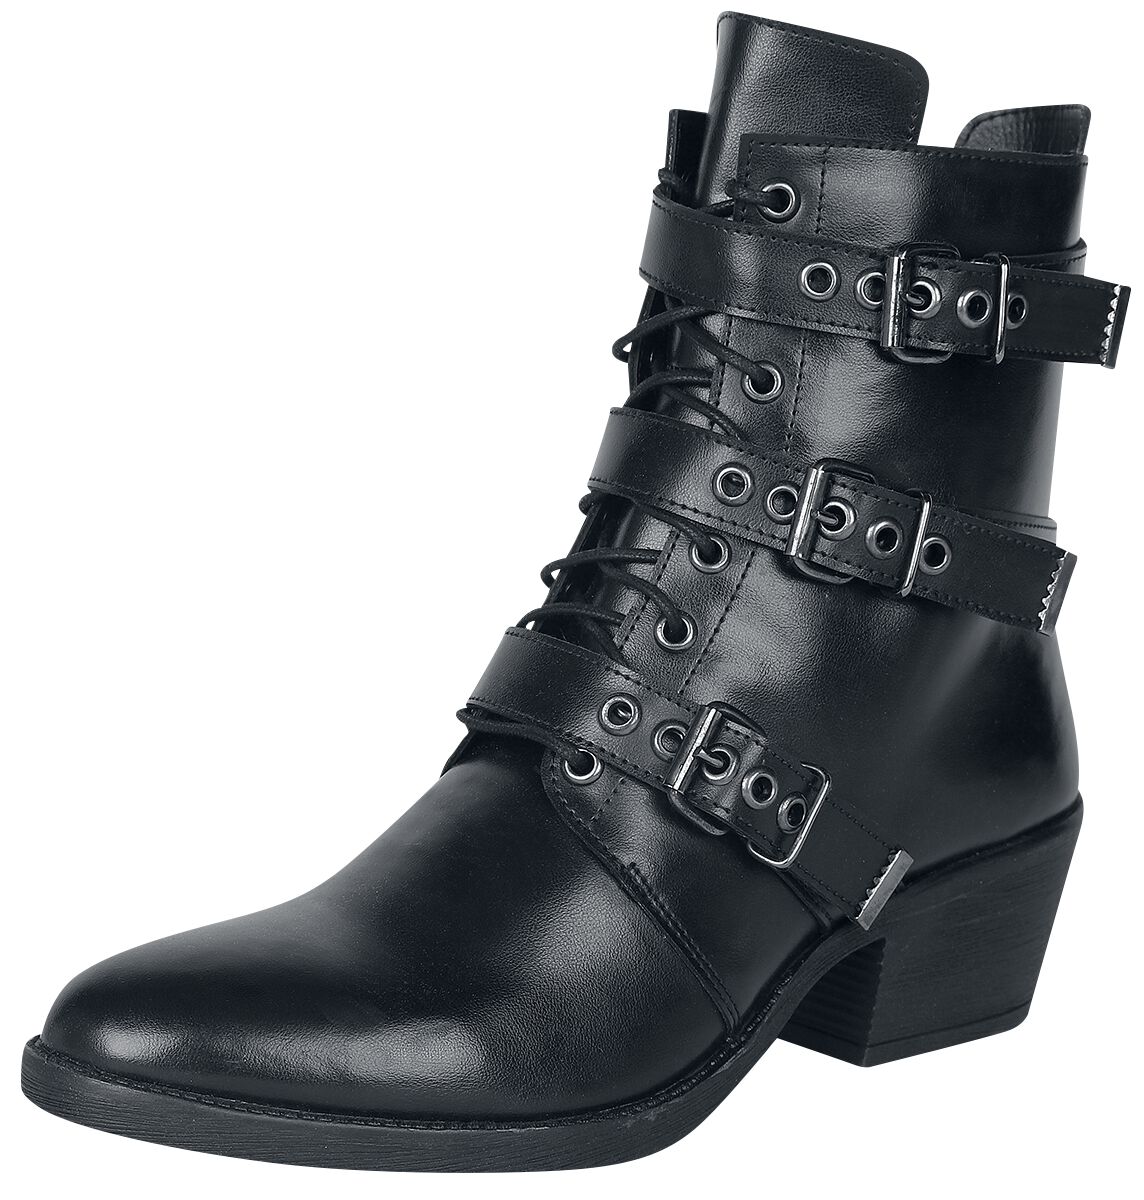 Image of Stivali stringati Gothic di Rock Rebel by EMP - Black lace-up boots with buckles - EU37 a EU41 - Donna - nero